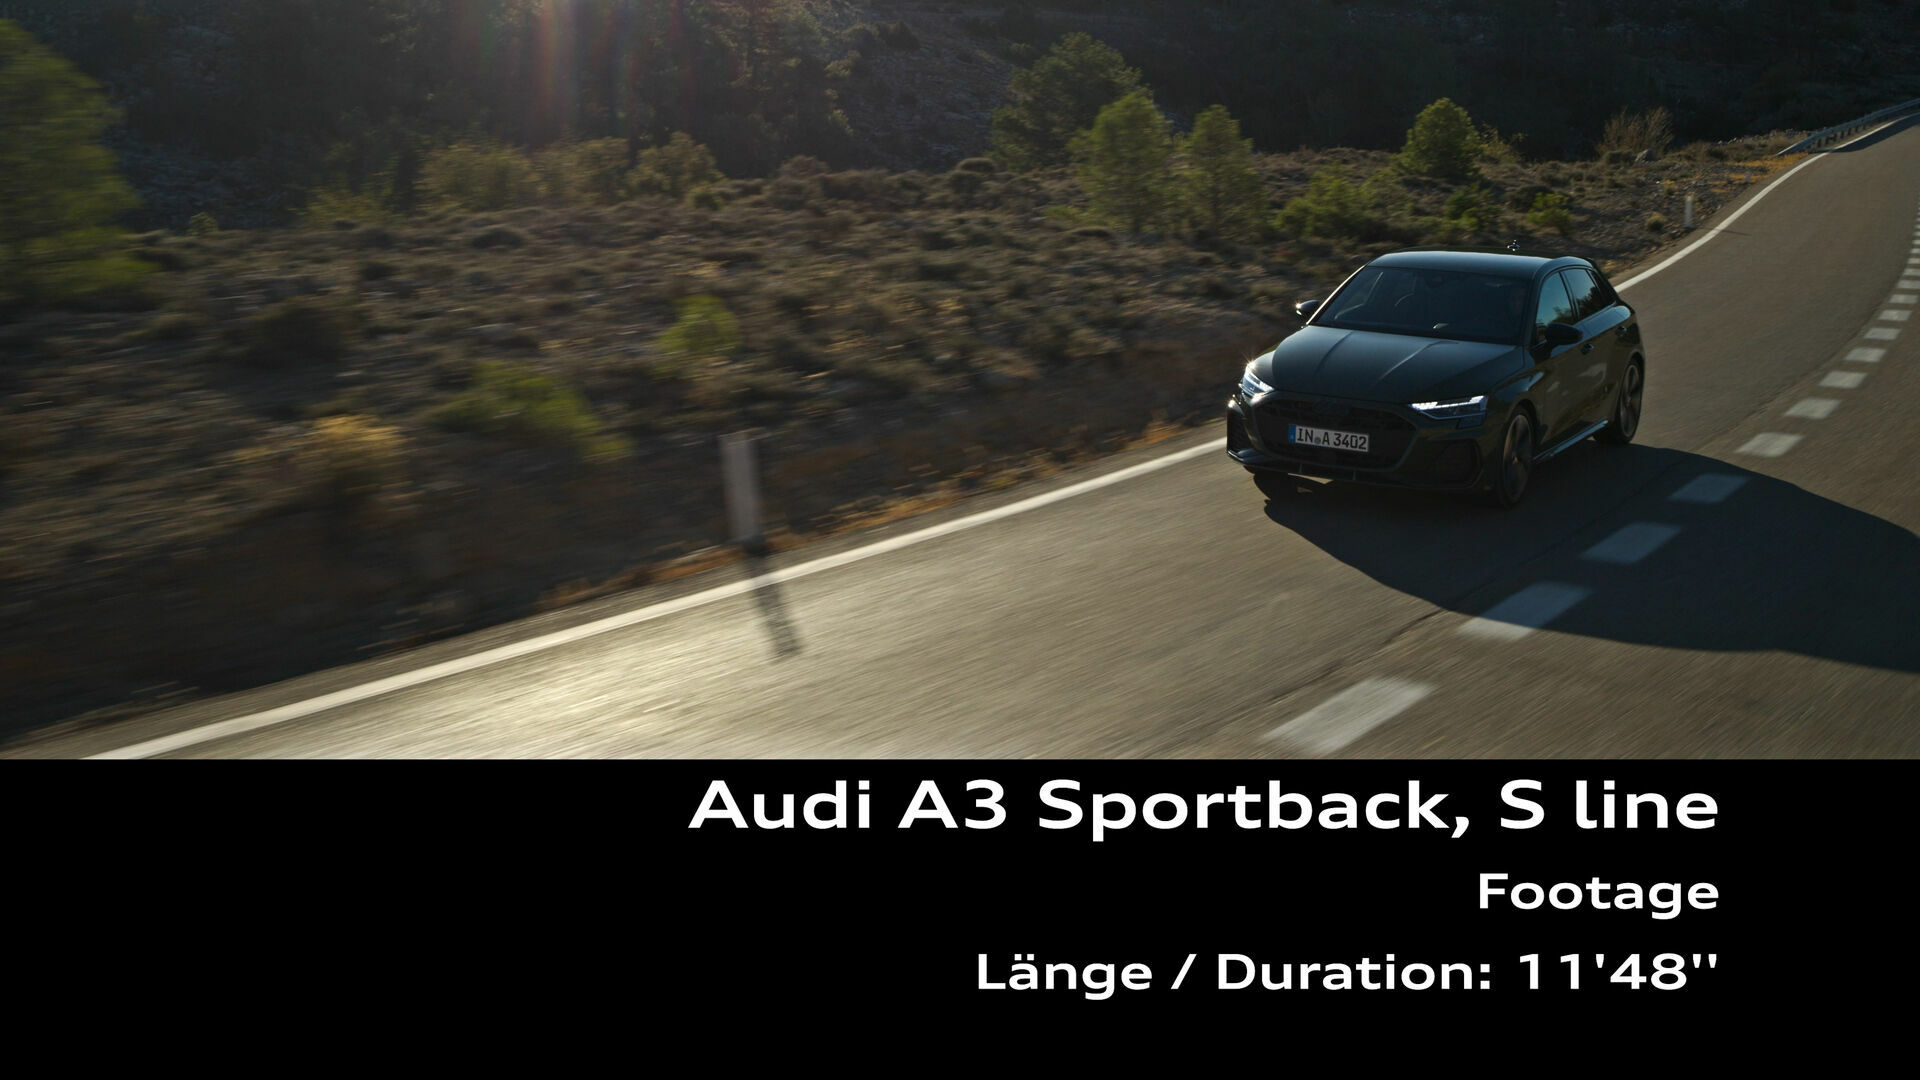 Audi A3 Sportback S line – Footage (dynamisch)